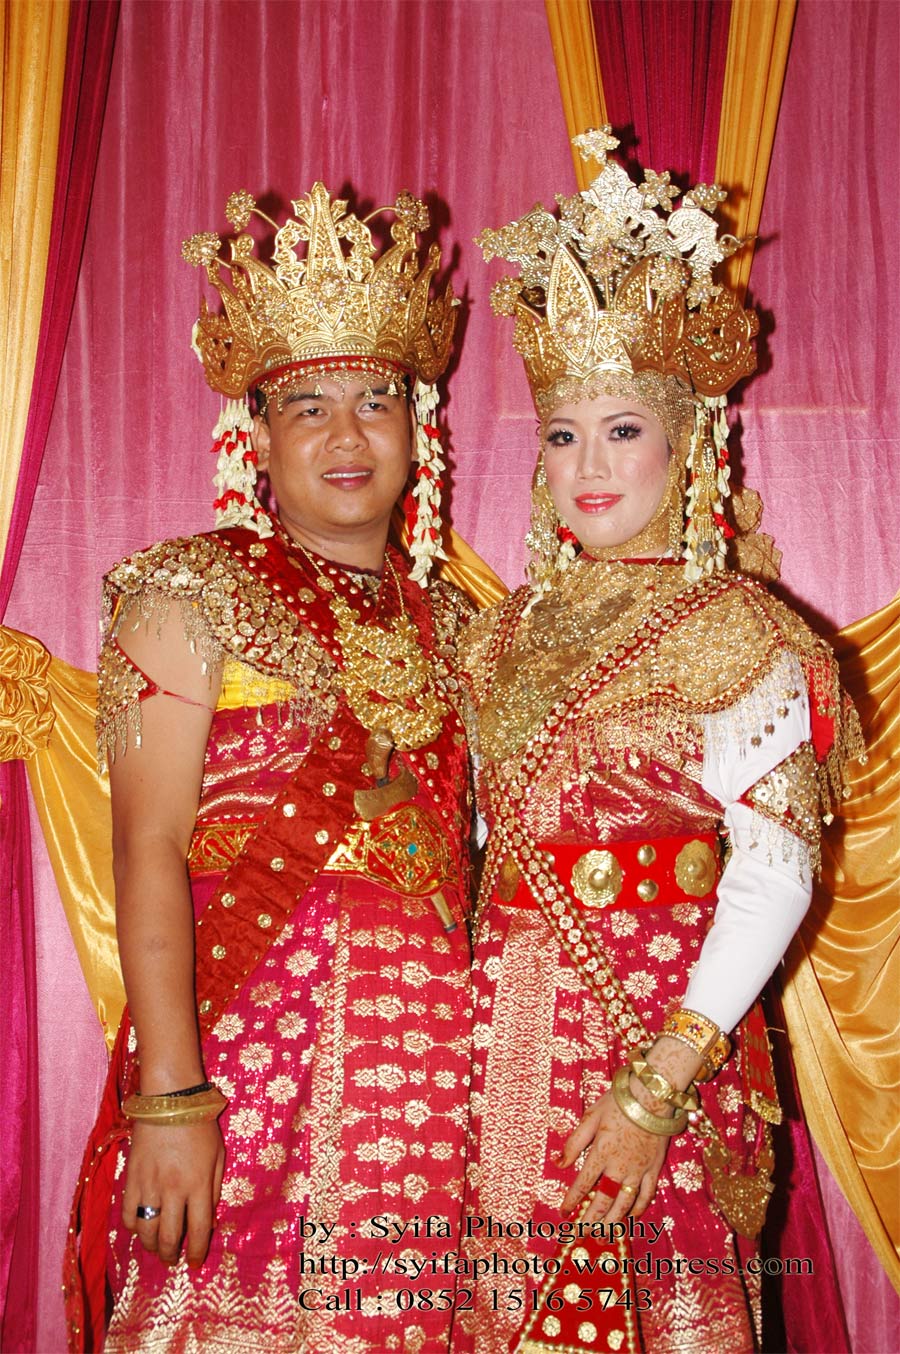 Download this Foto Pernikahan Weeding Photography Pakaian Adat Jambi picture